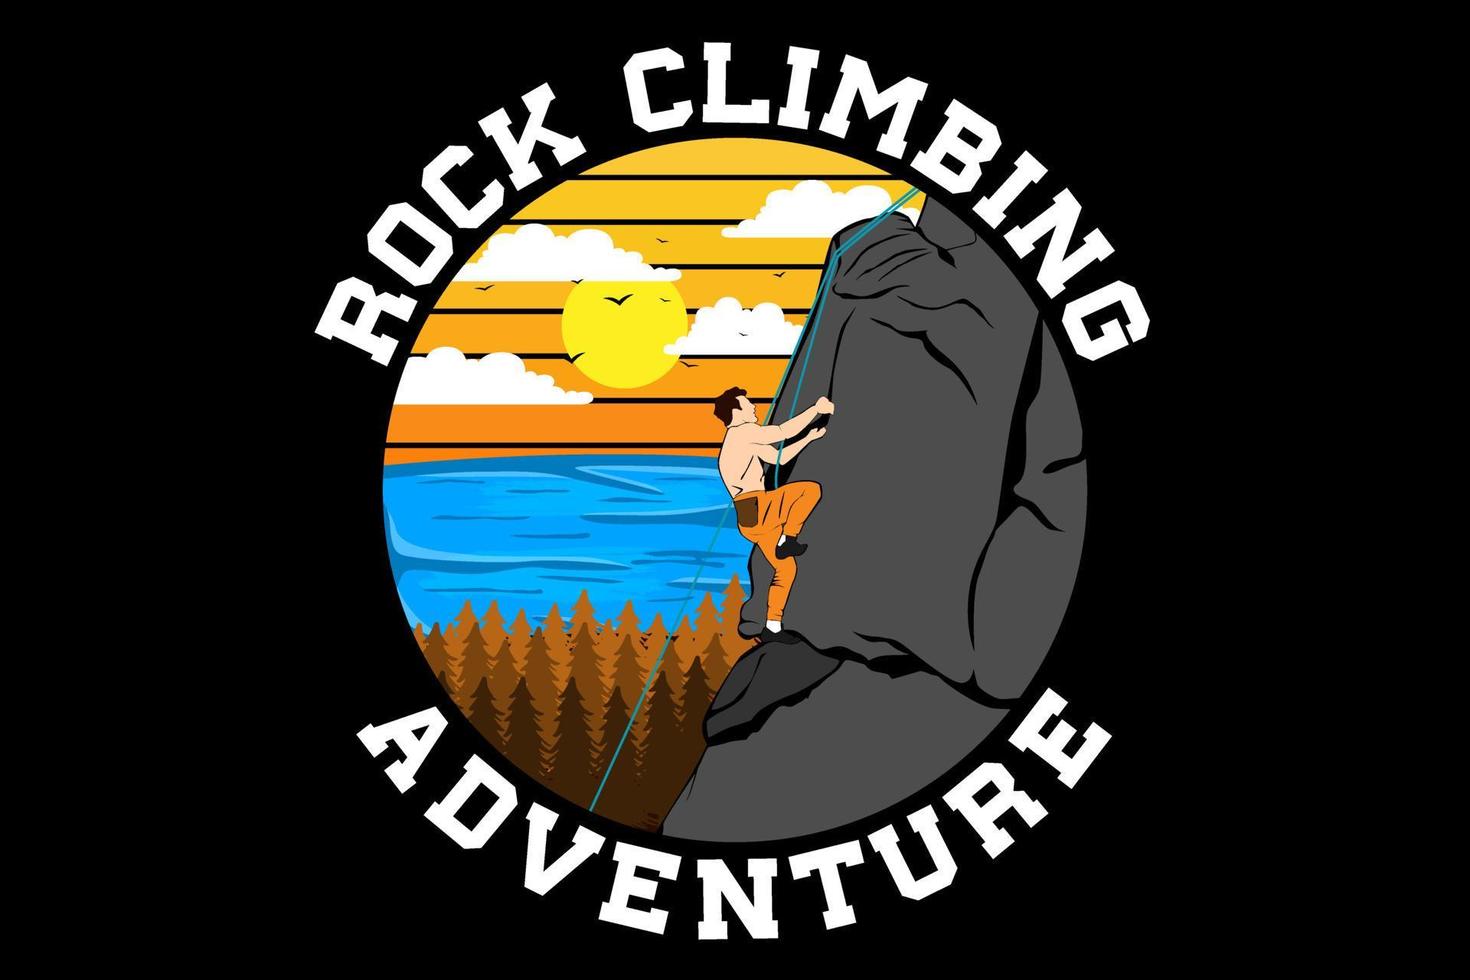 Rock climbing adventure design silhouette vintage retro vector